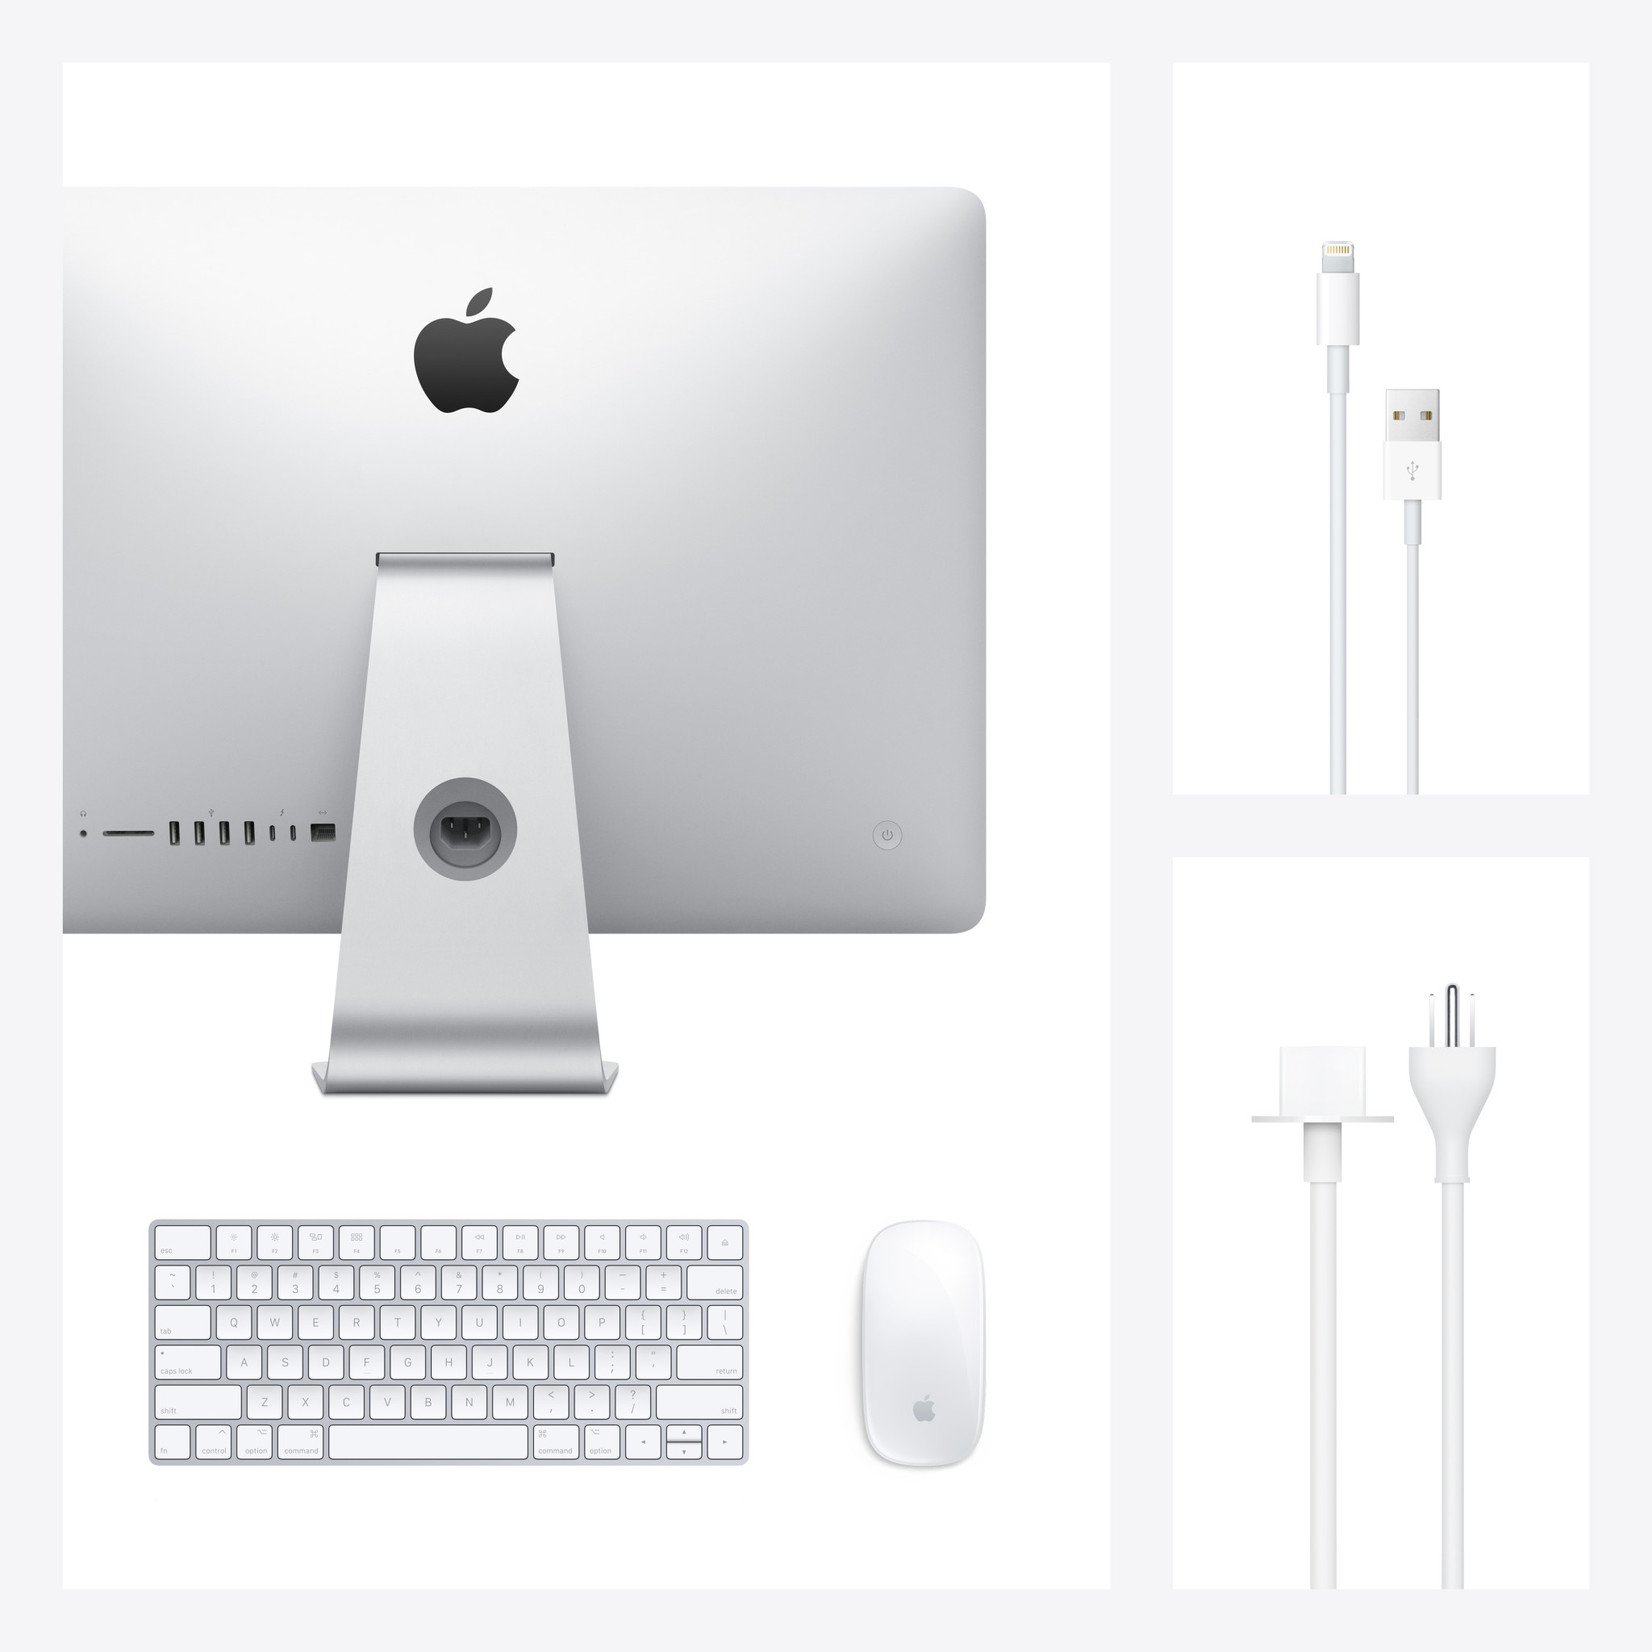 Apple 21.5-inch iMac: i5 Processor, 8GB Memory, 256GB SSD